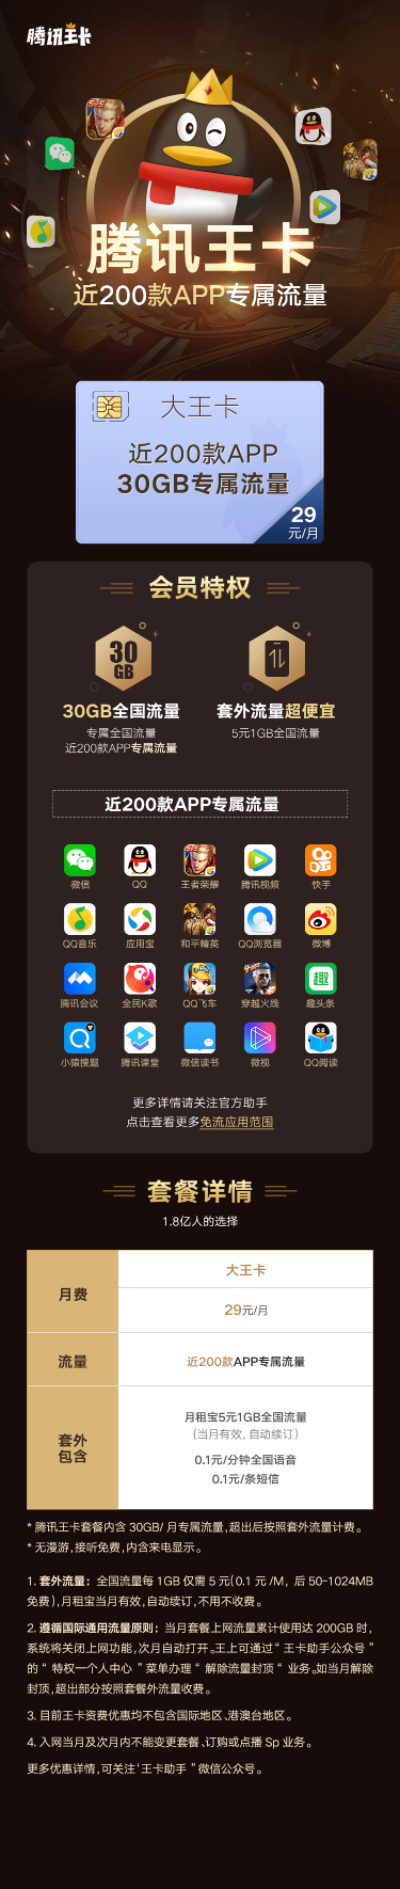 China unicom 中国联通 腾讯大王卡 29元